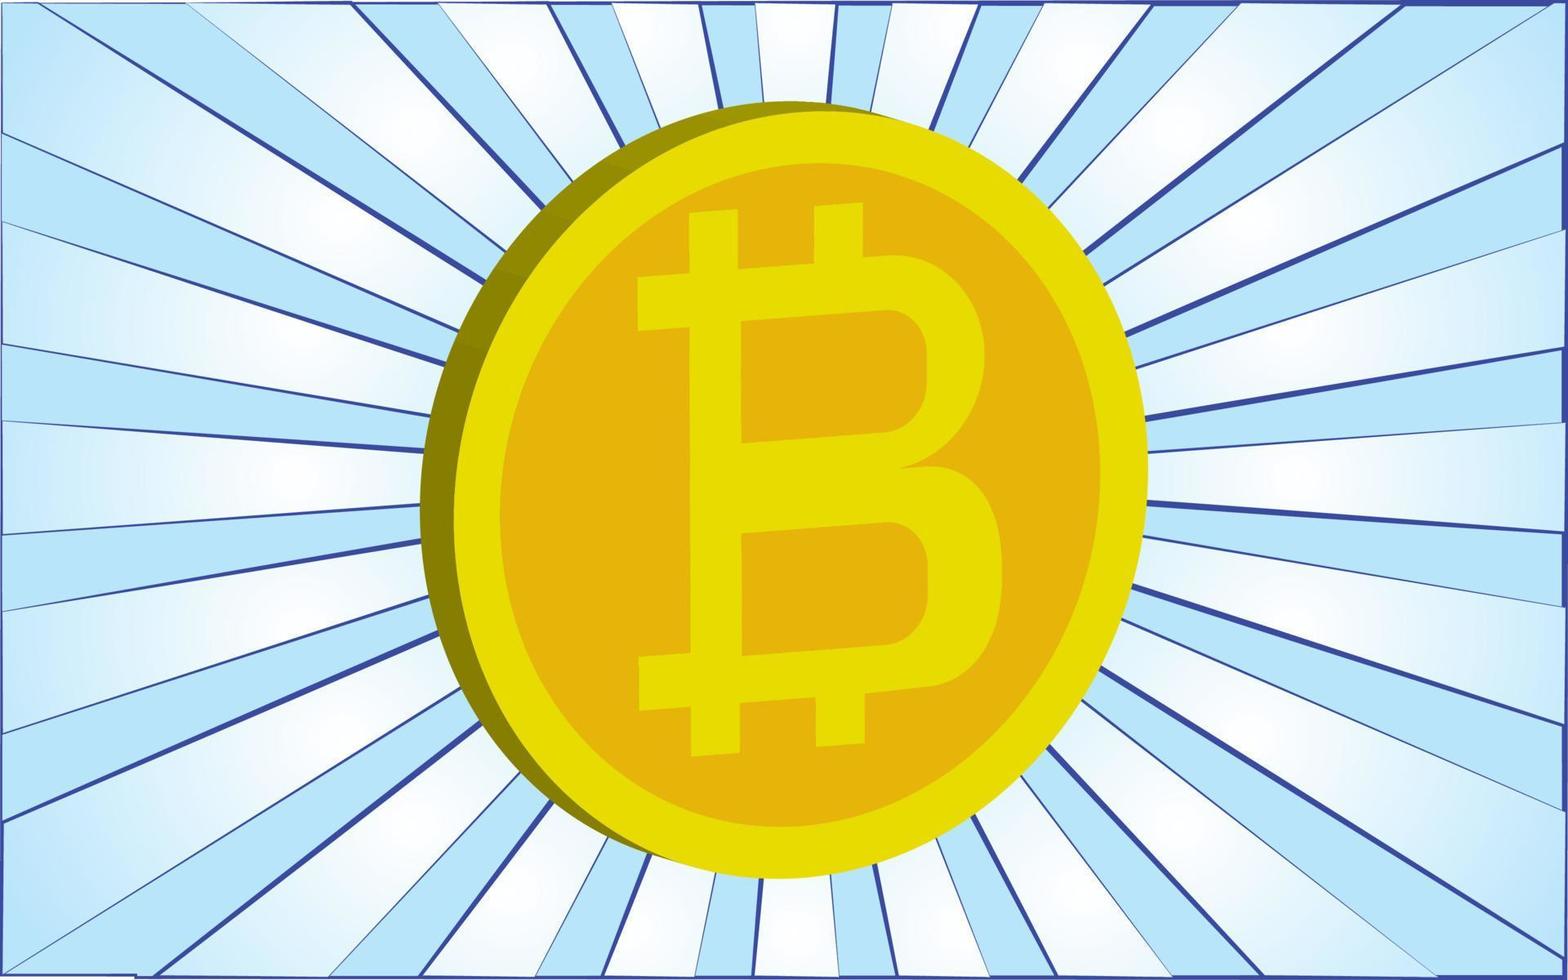 moneda de criptomoneda bitcoin grande redonda dorada sobre un fondo de rayos azules abstractos. ilustración vectorial vector